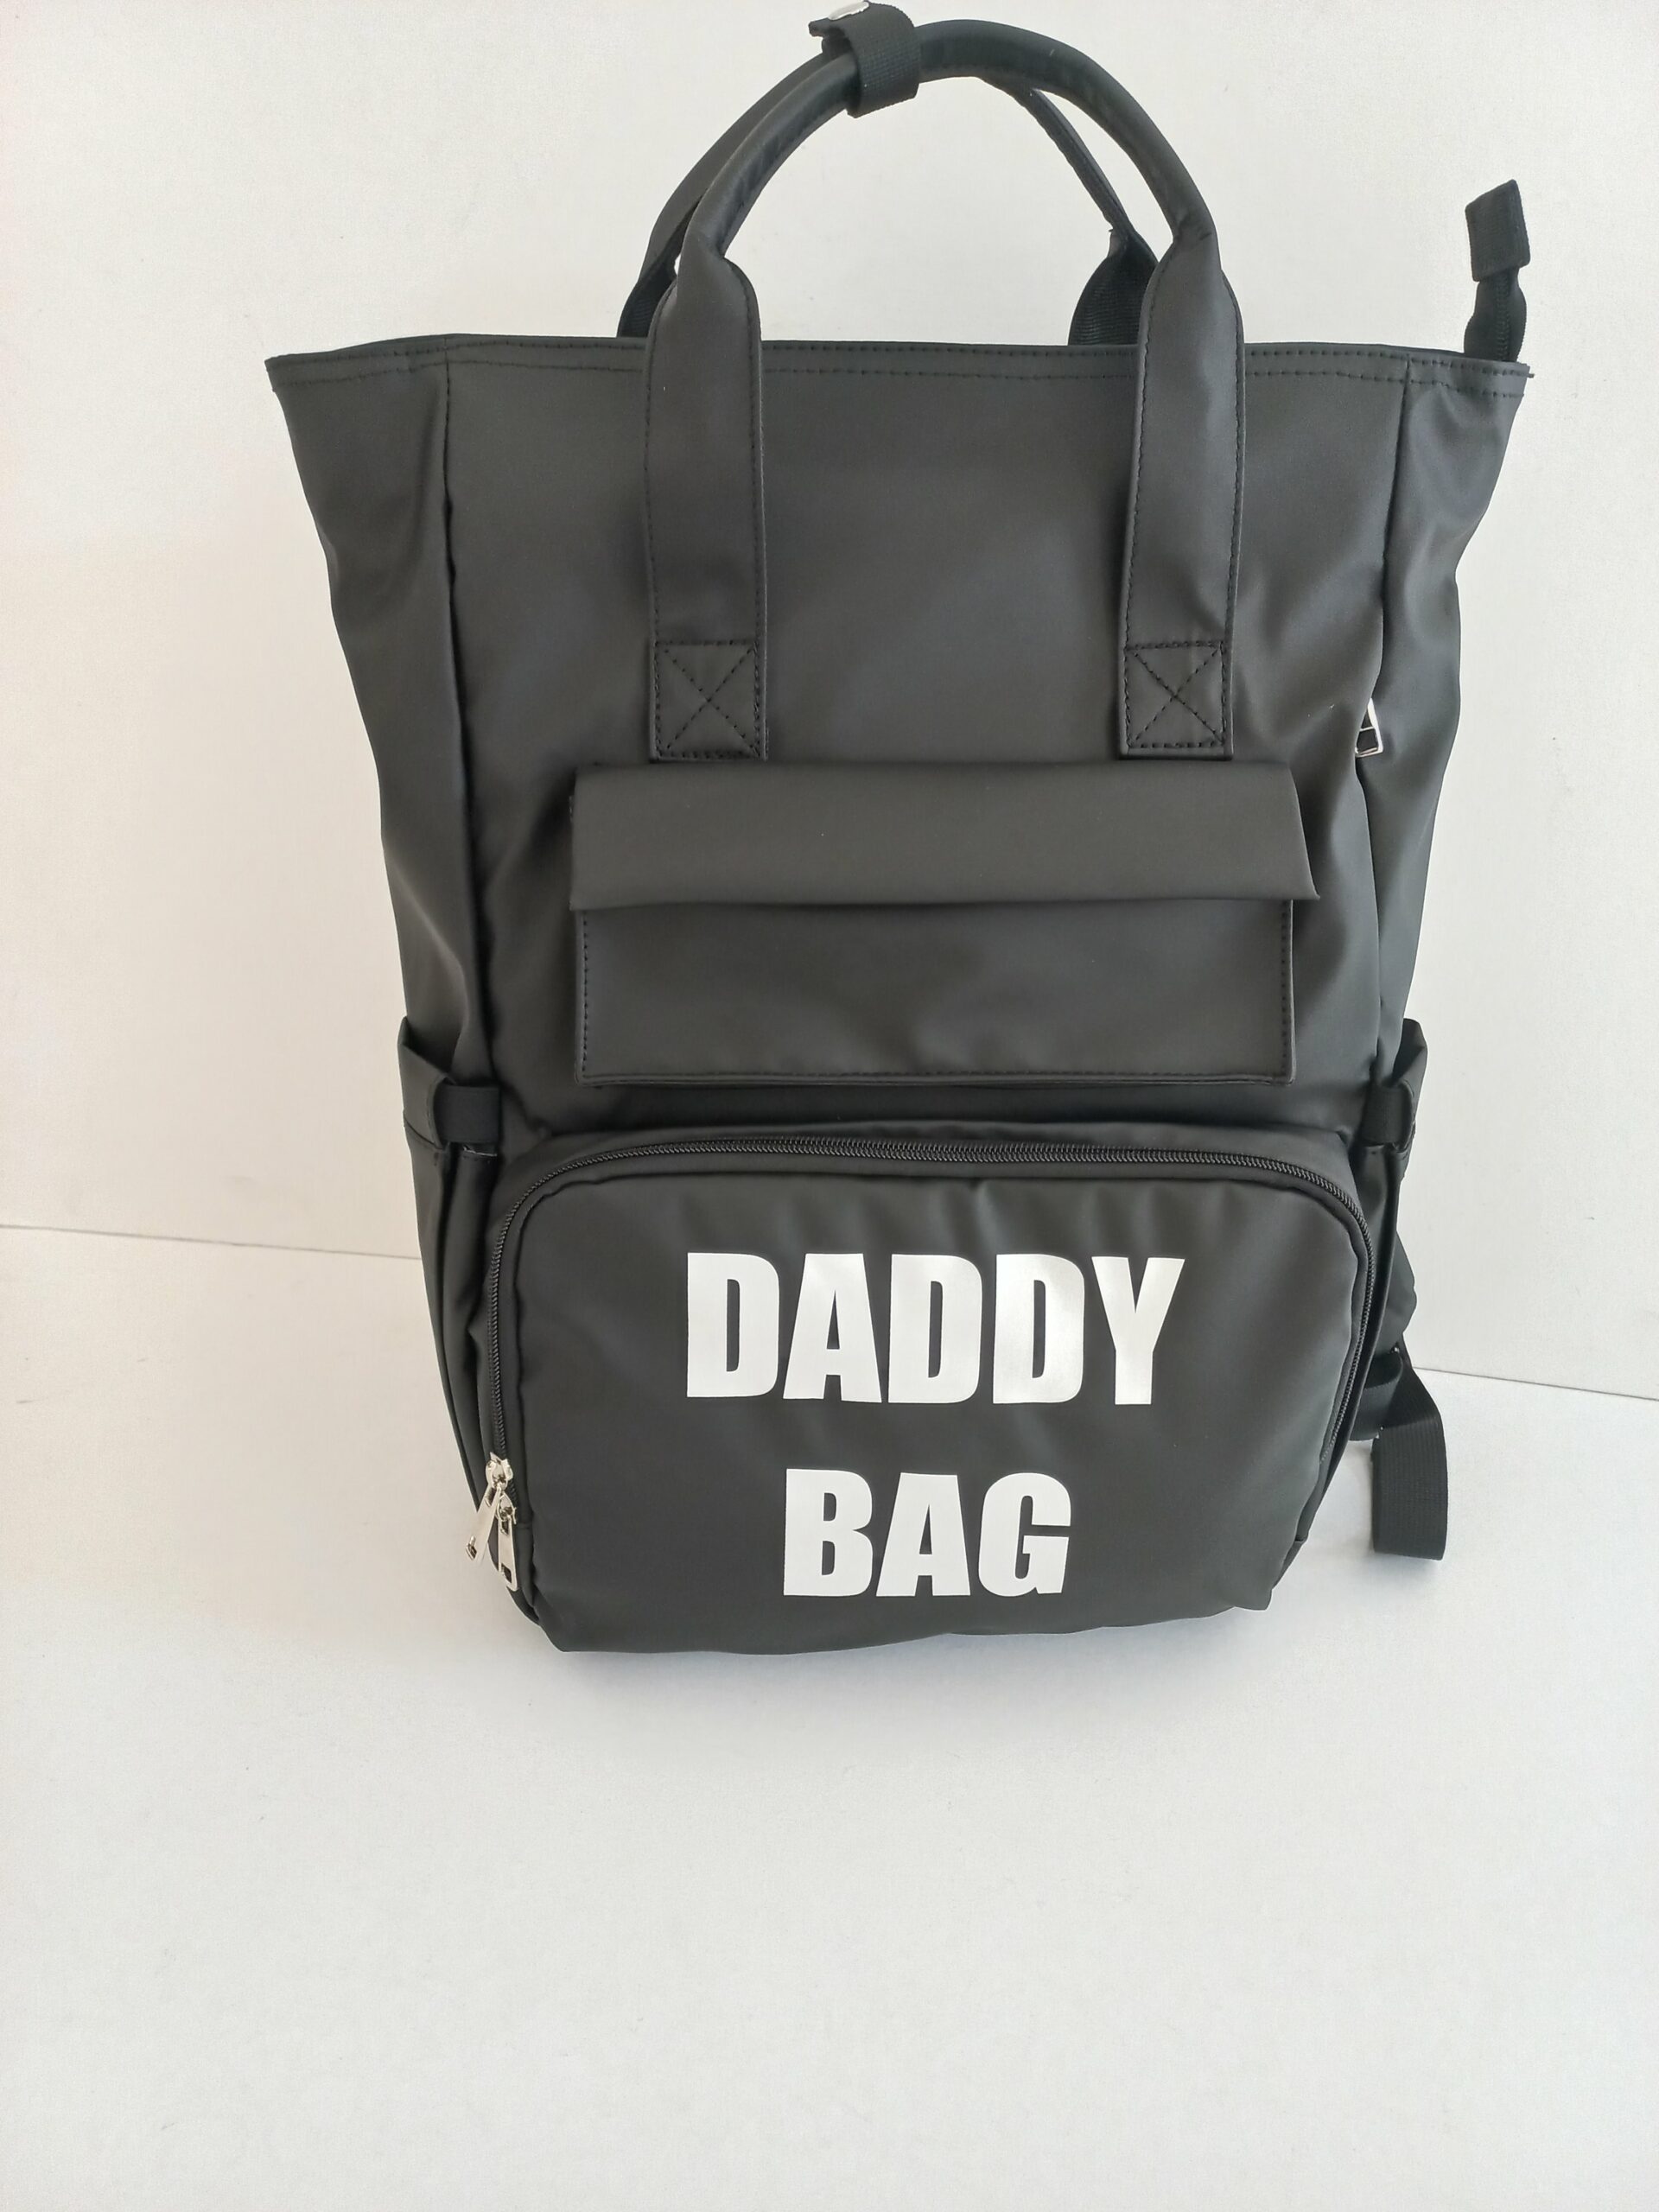 Dad bag